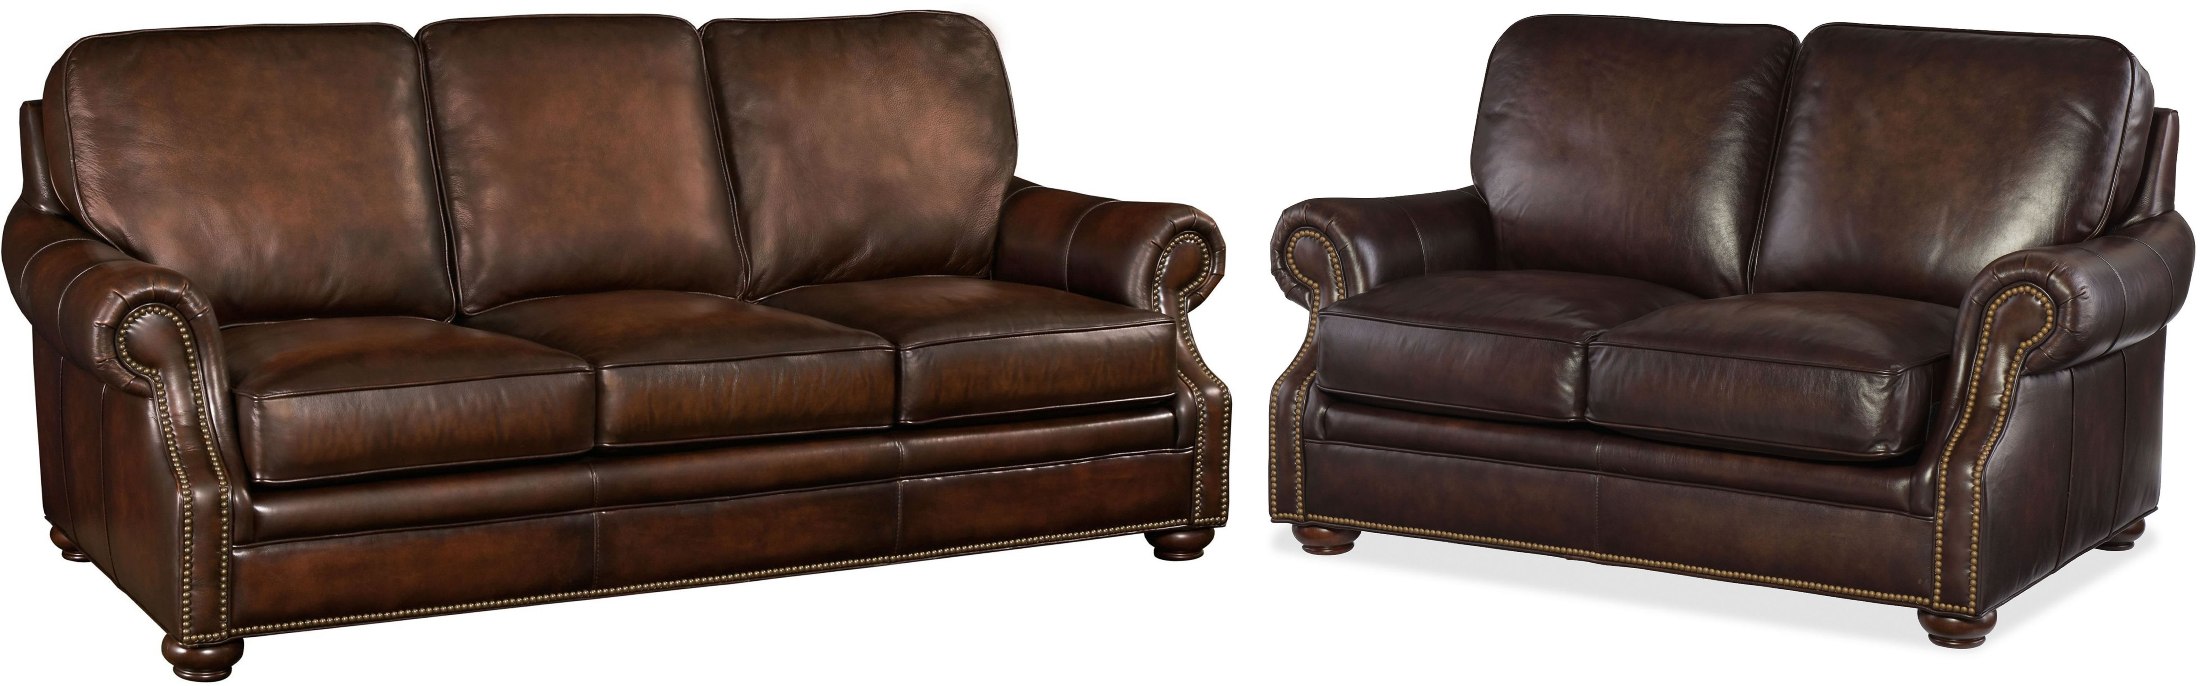 montgomery genuine leather sofa in burgundy